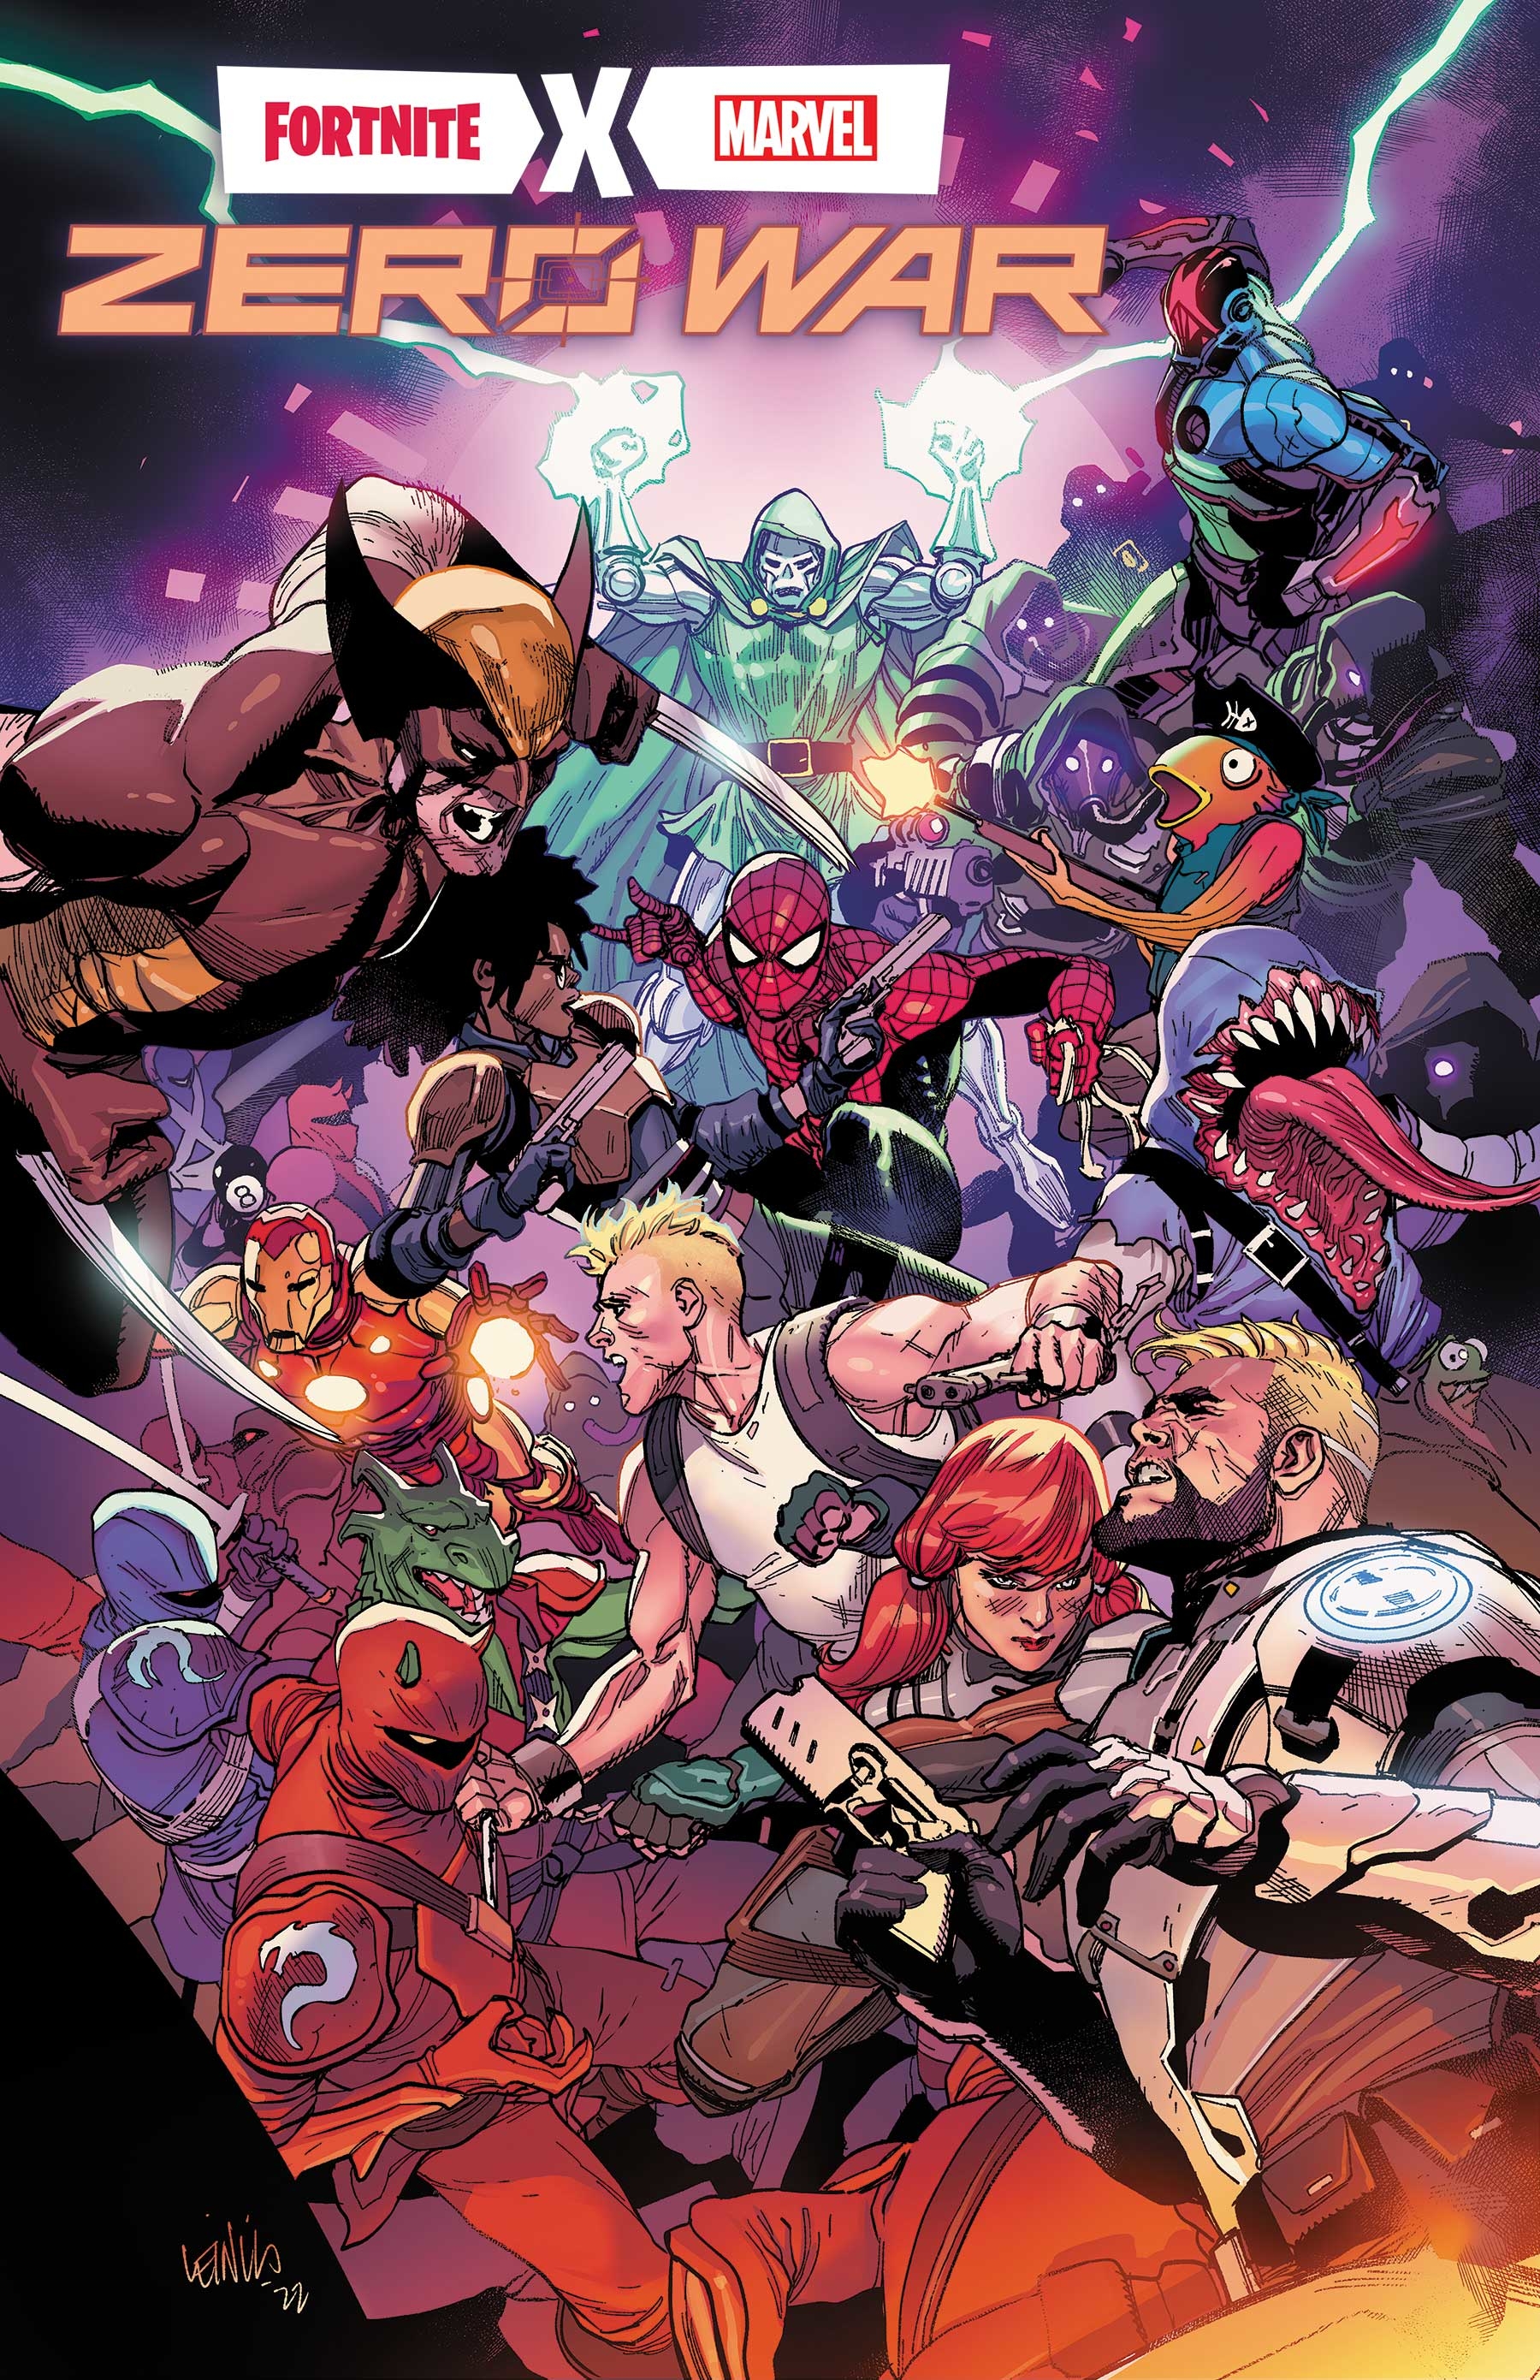 Fortnite X Marvel Zero War #5